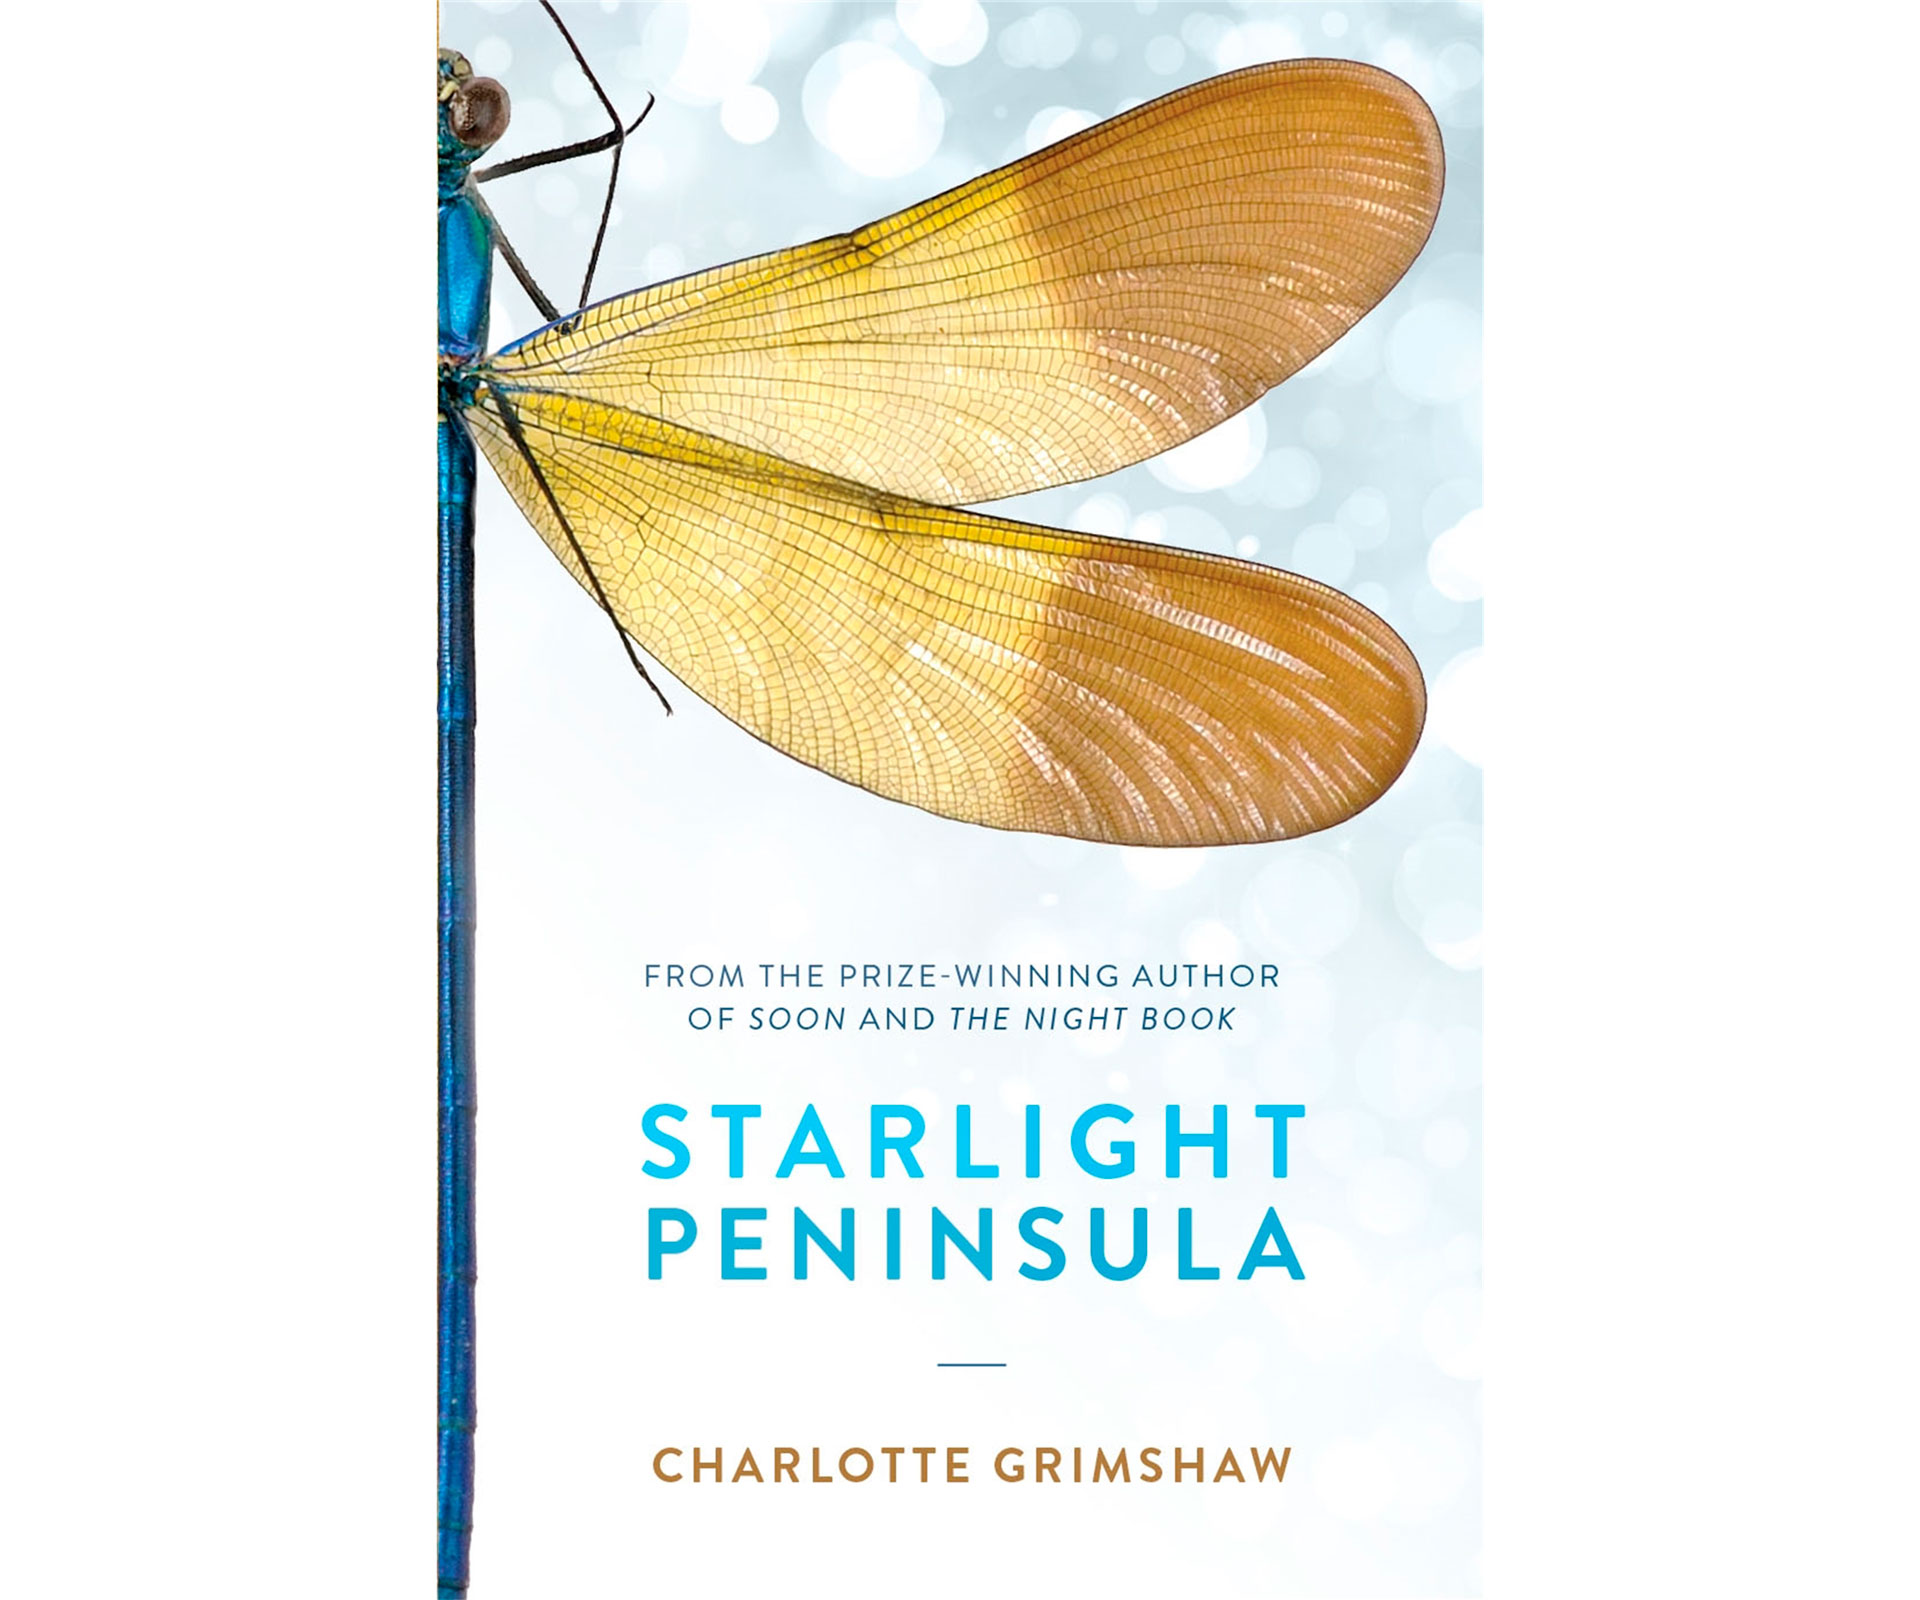 Starlight Peninsula by Charlotte Grimshaw.